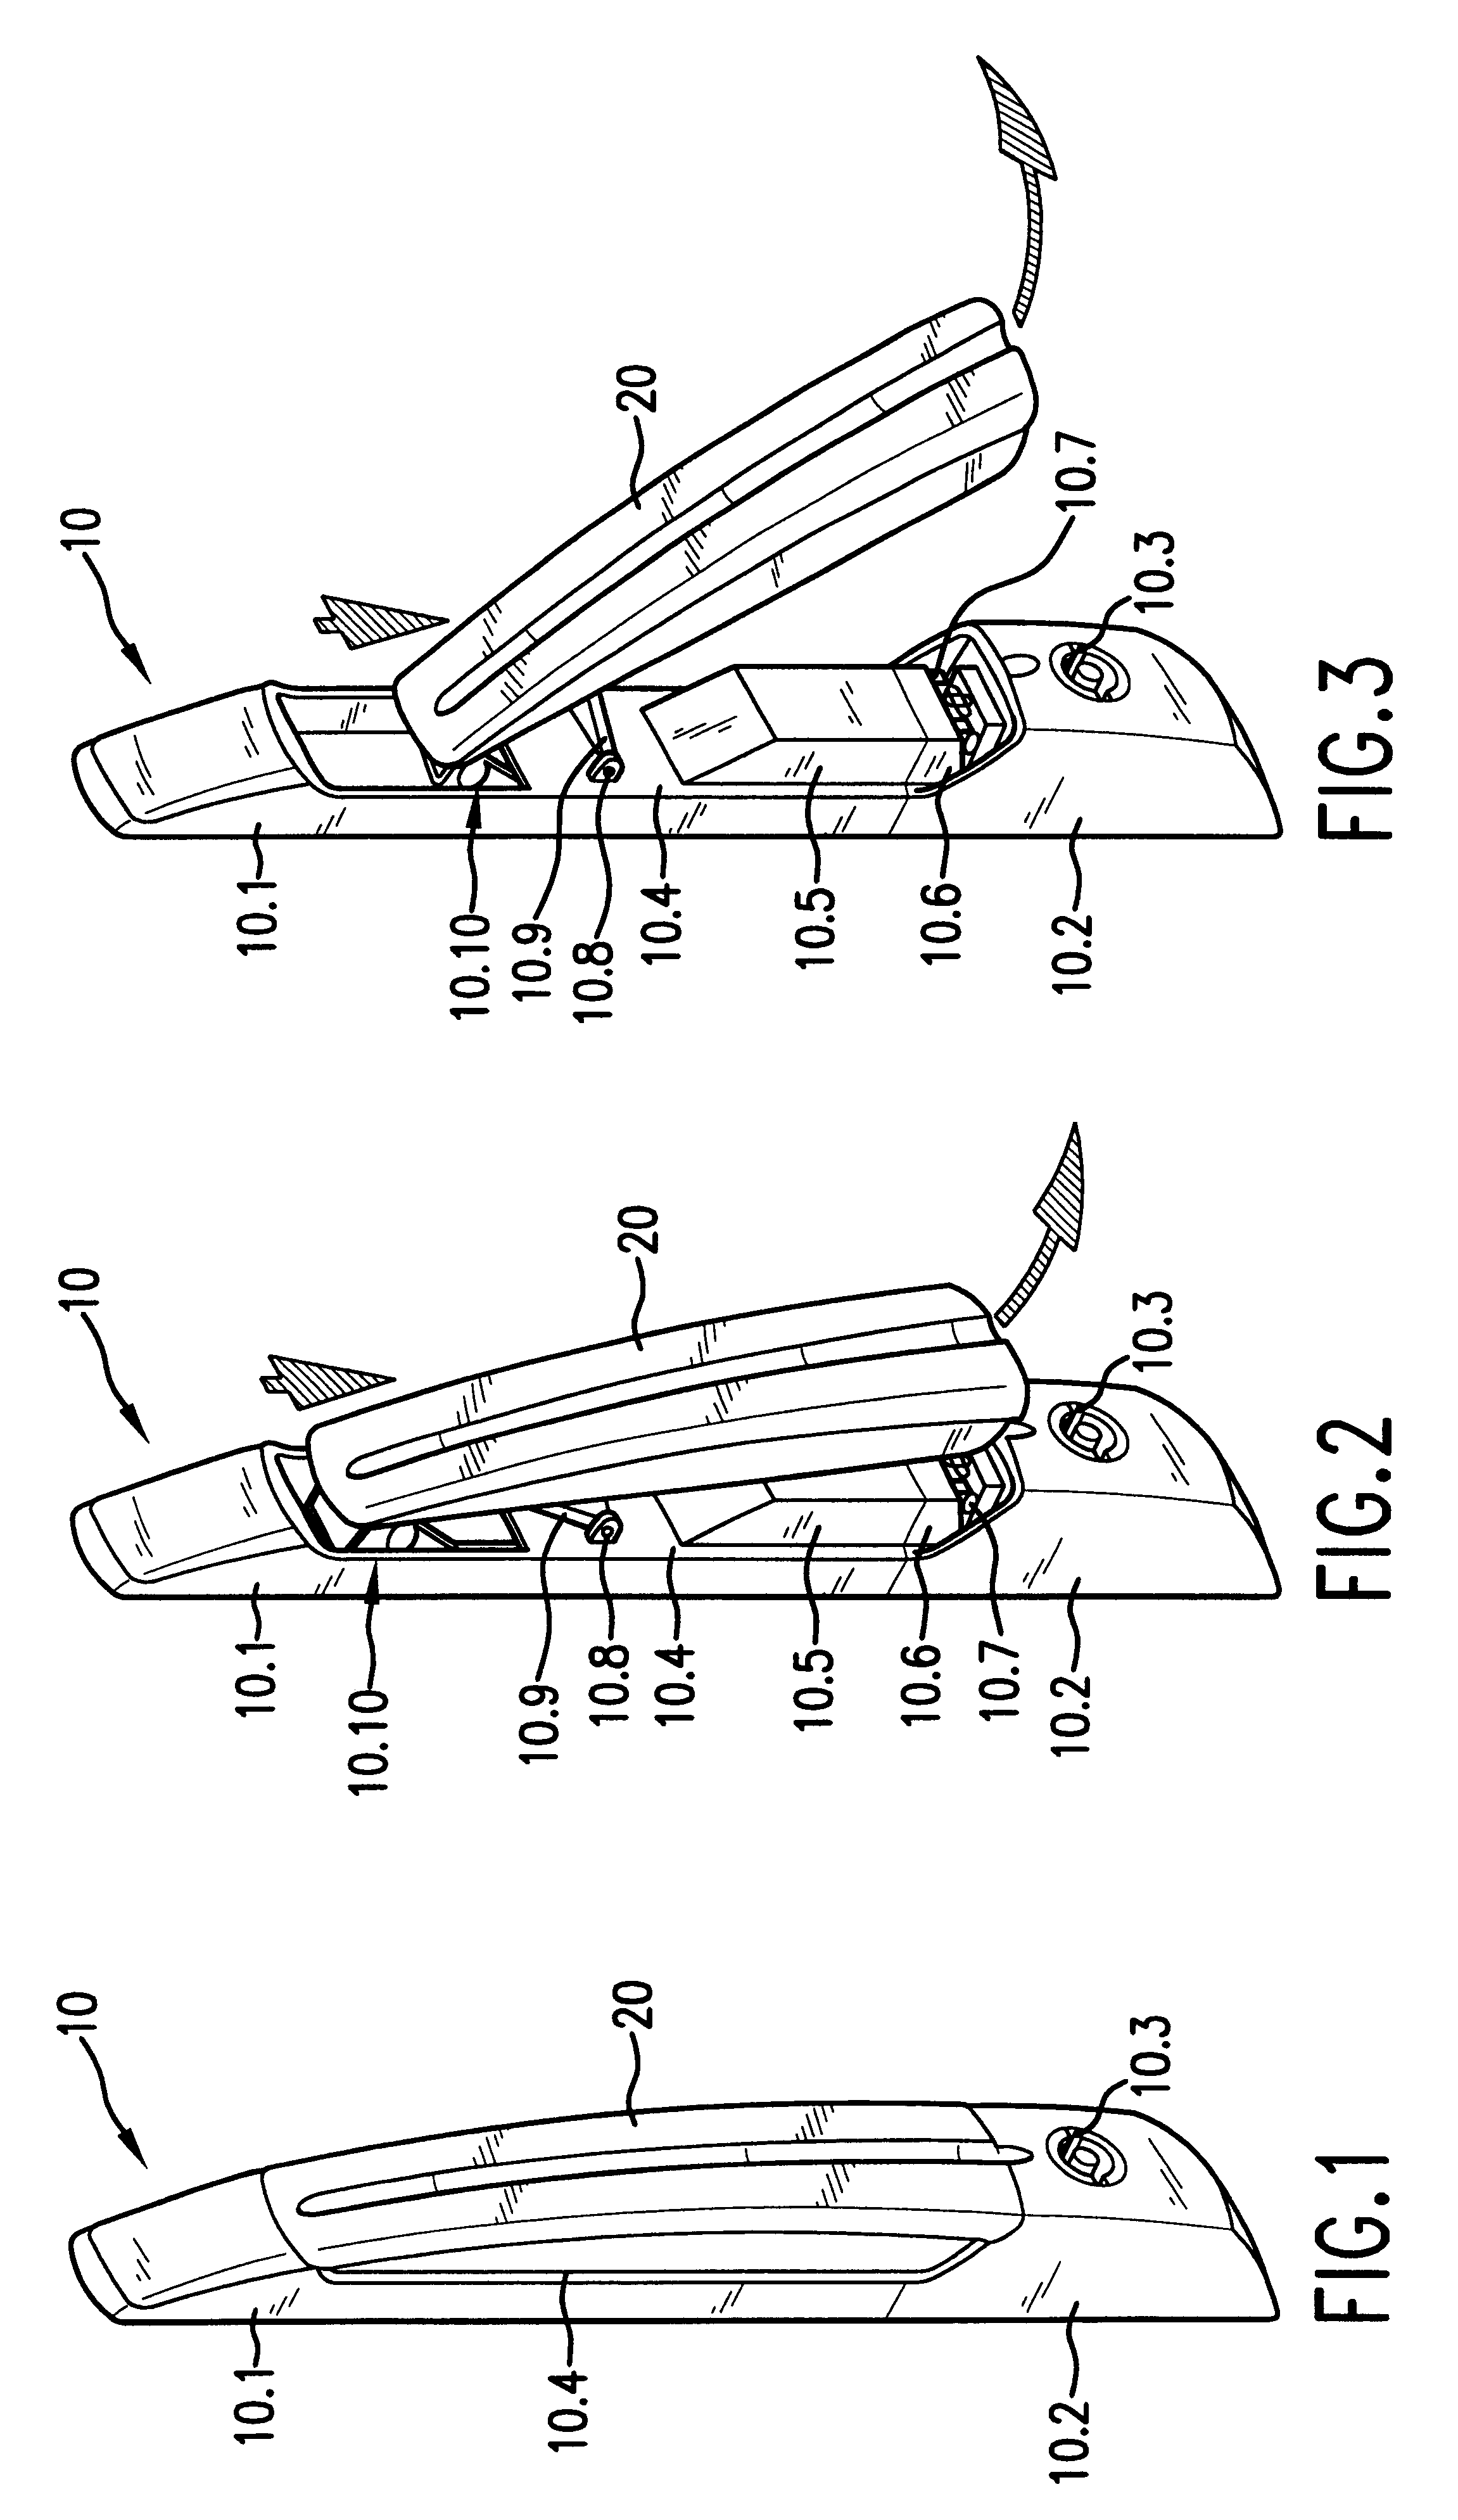 Slide rod locking device